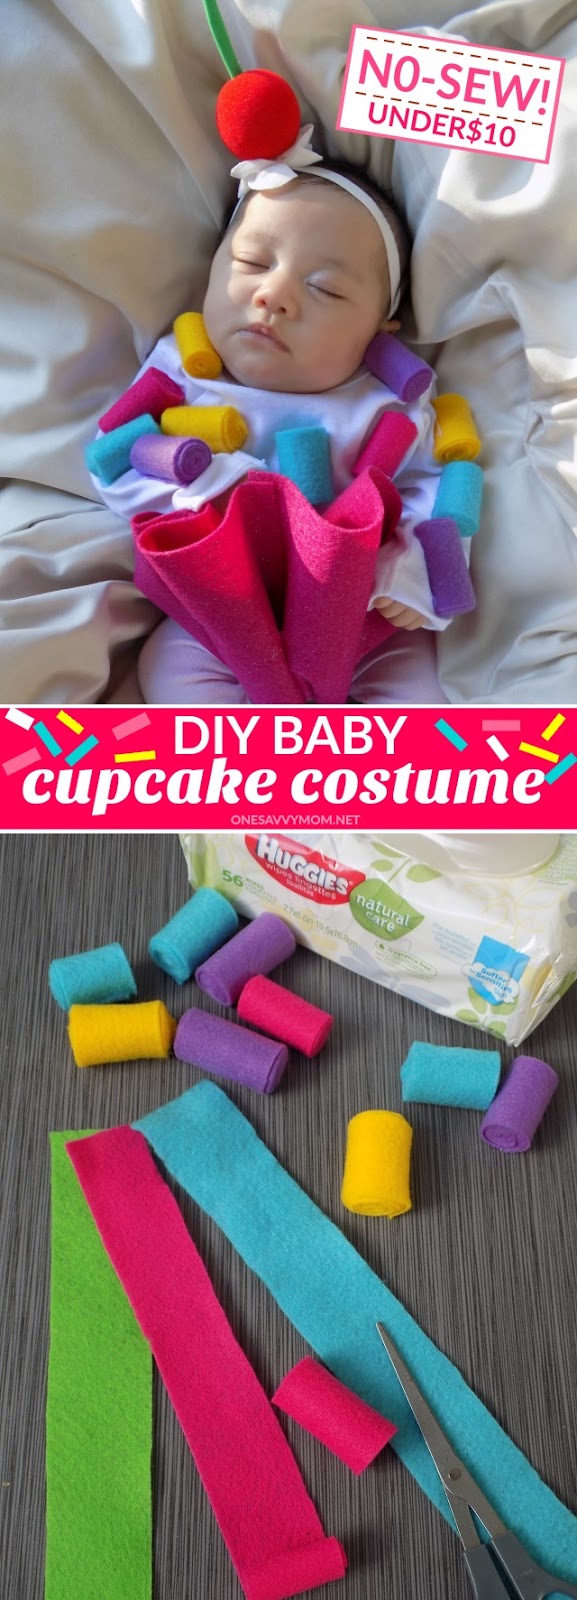 One Savvy Mom ™  NYC Area Mom Blog: No-Sew DIY Baby Cupcake